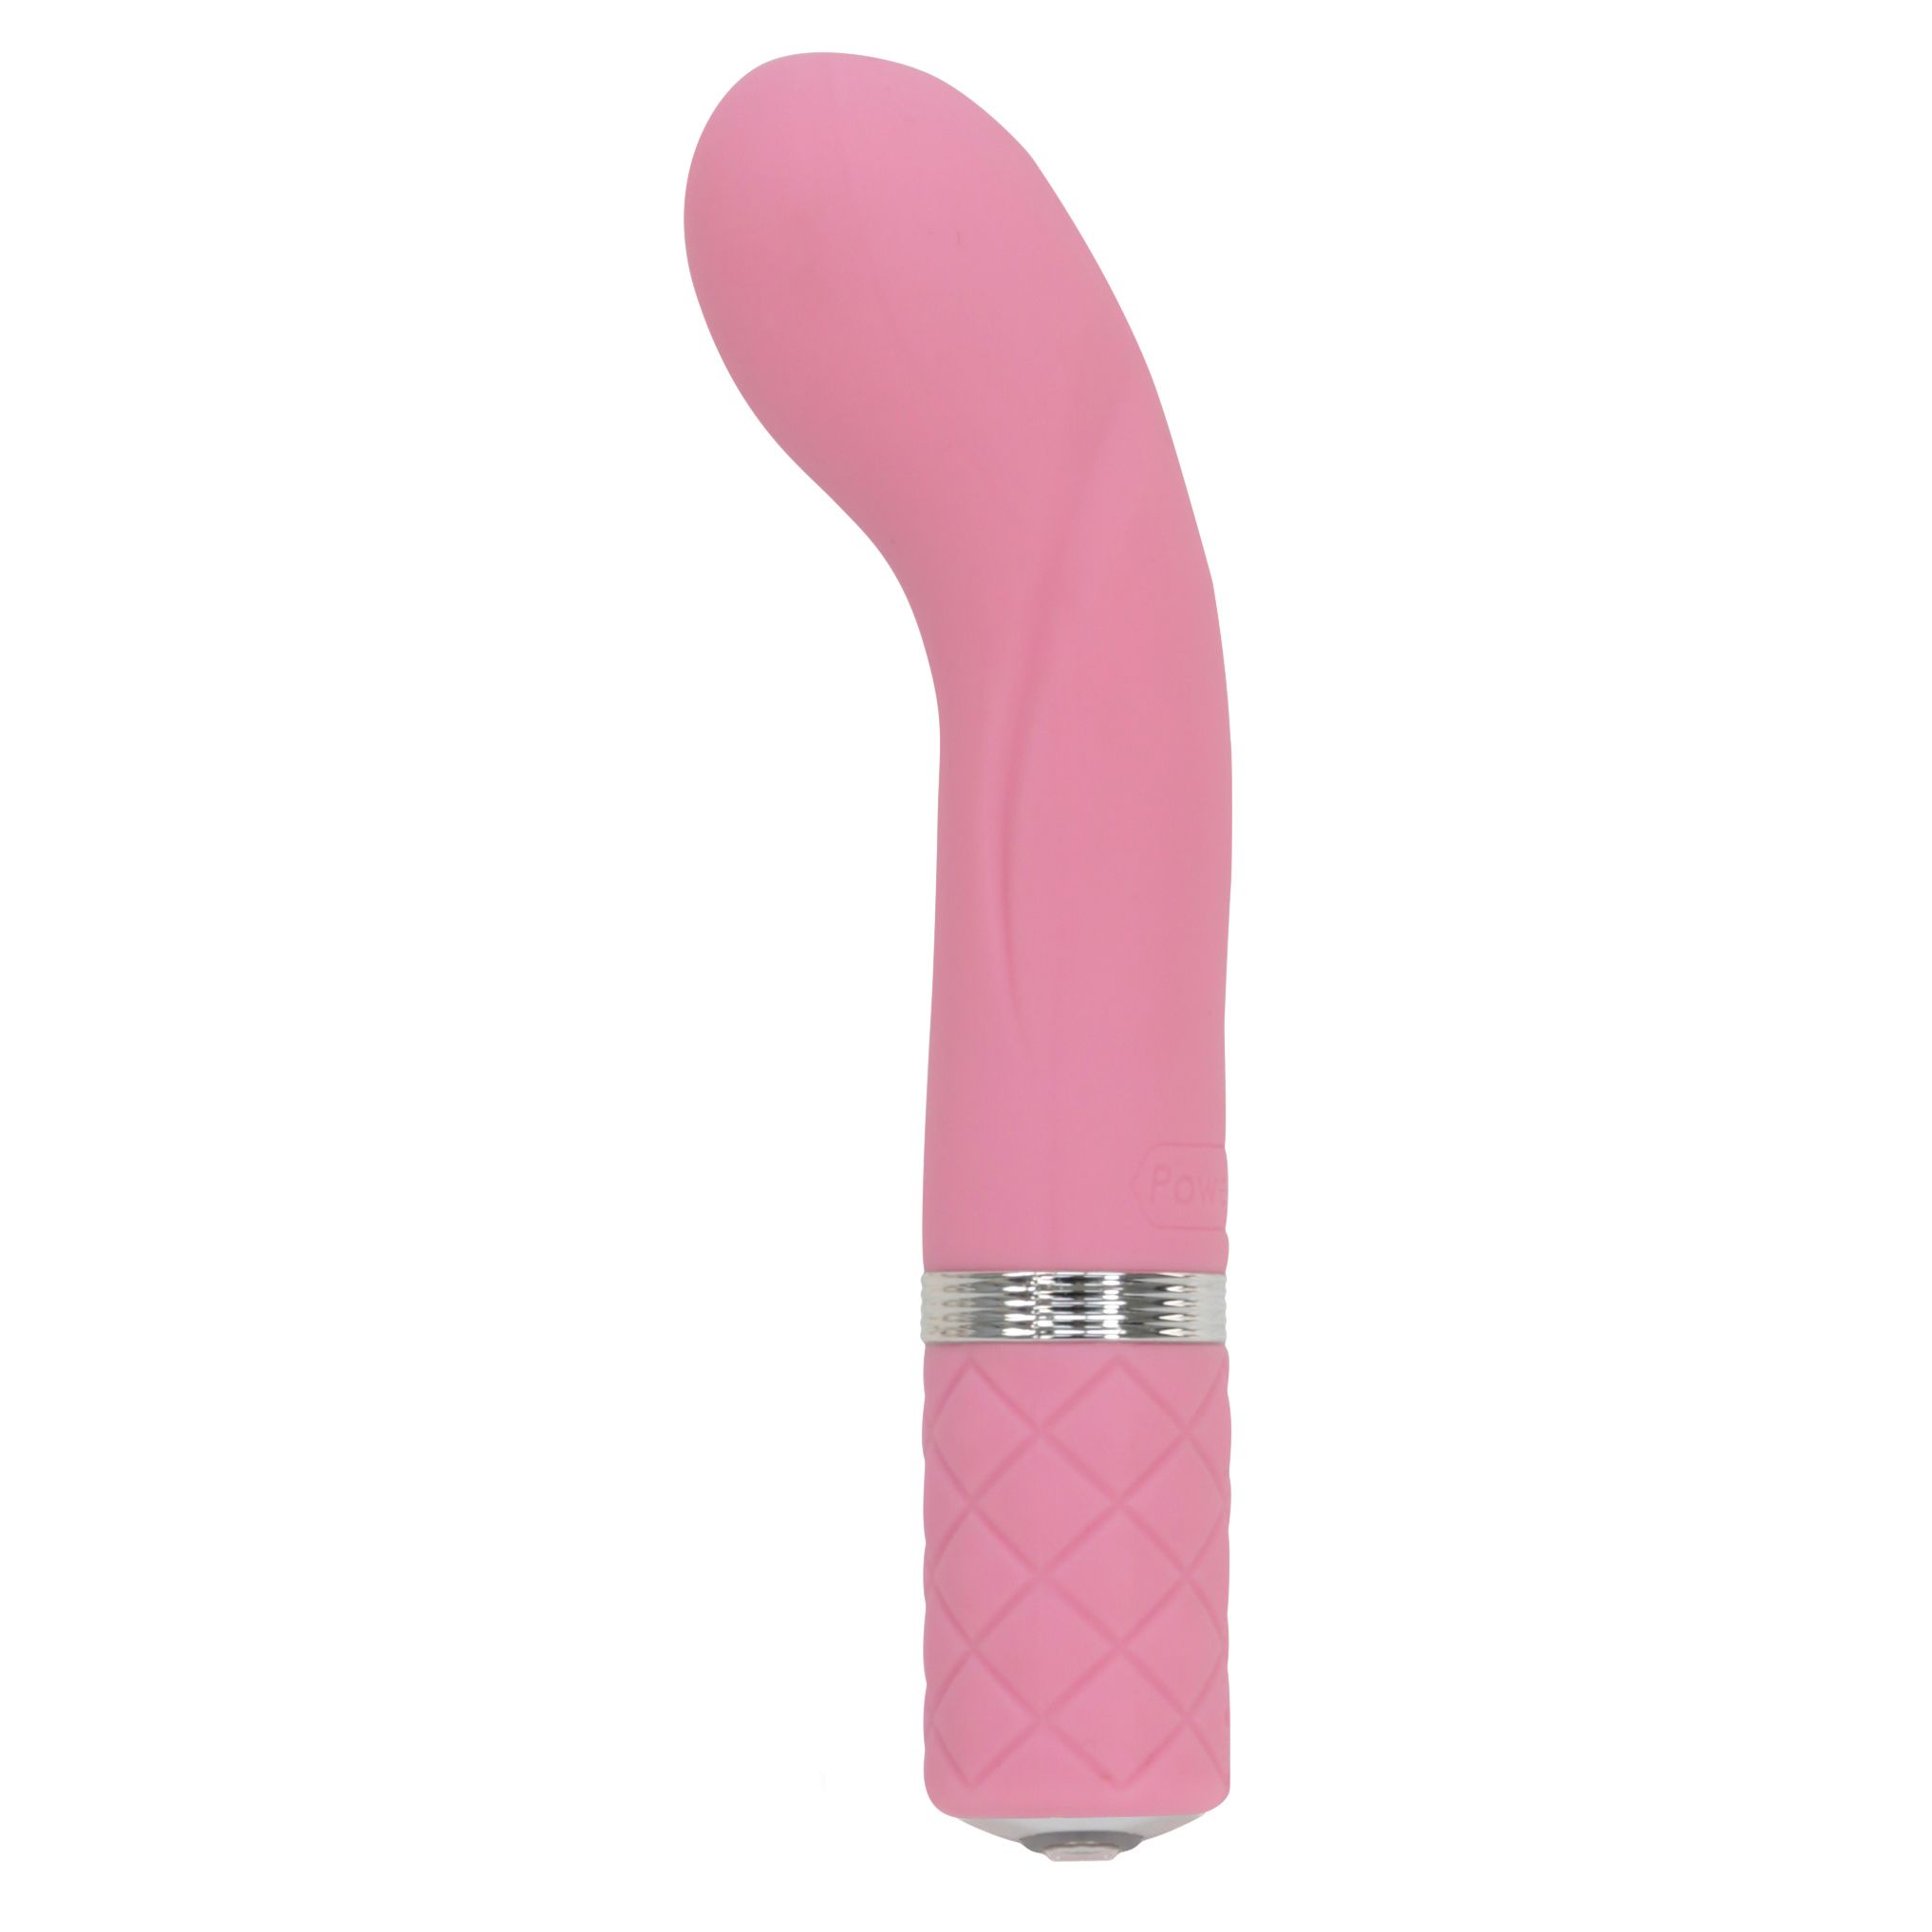 Pillow Talk Racy Mini G-Spot Vibrator – Pink